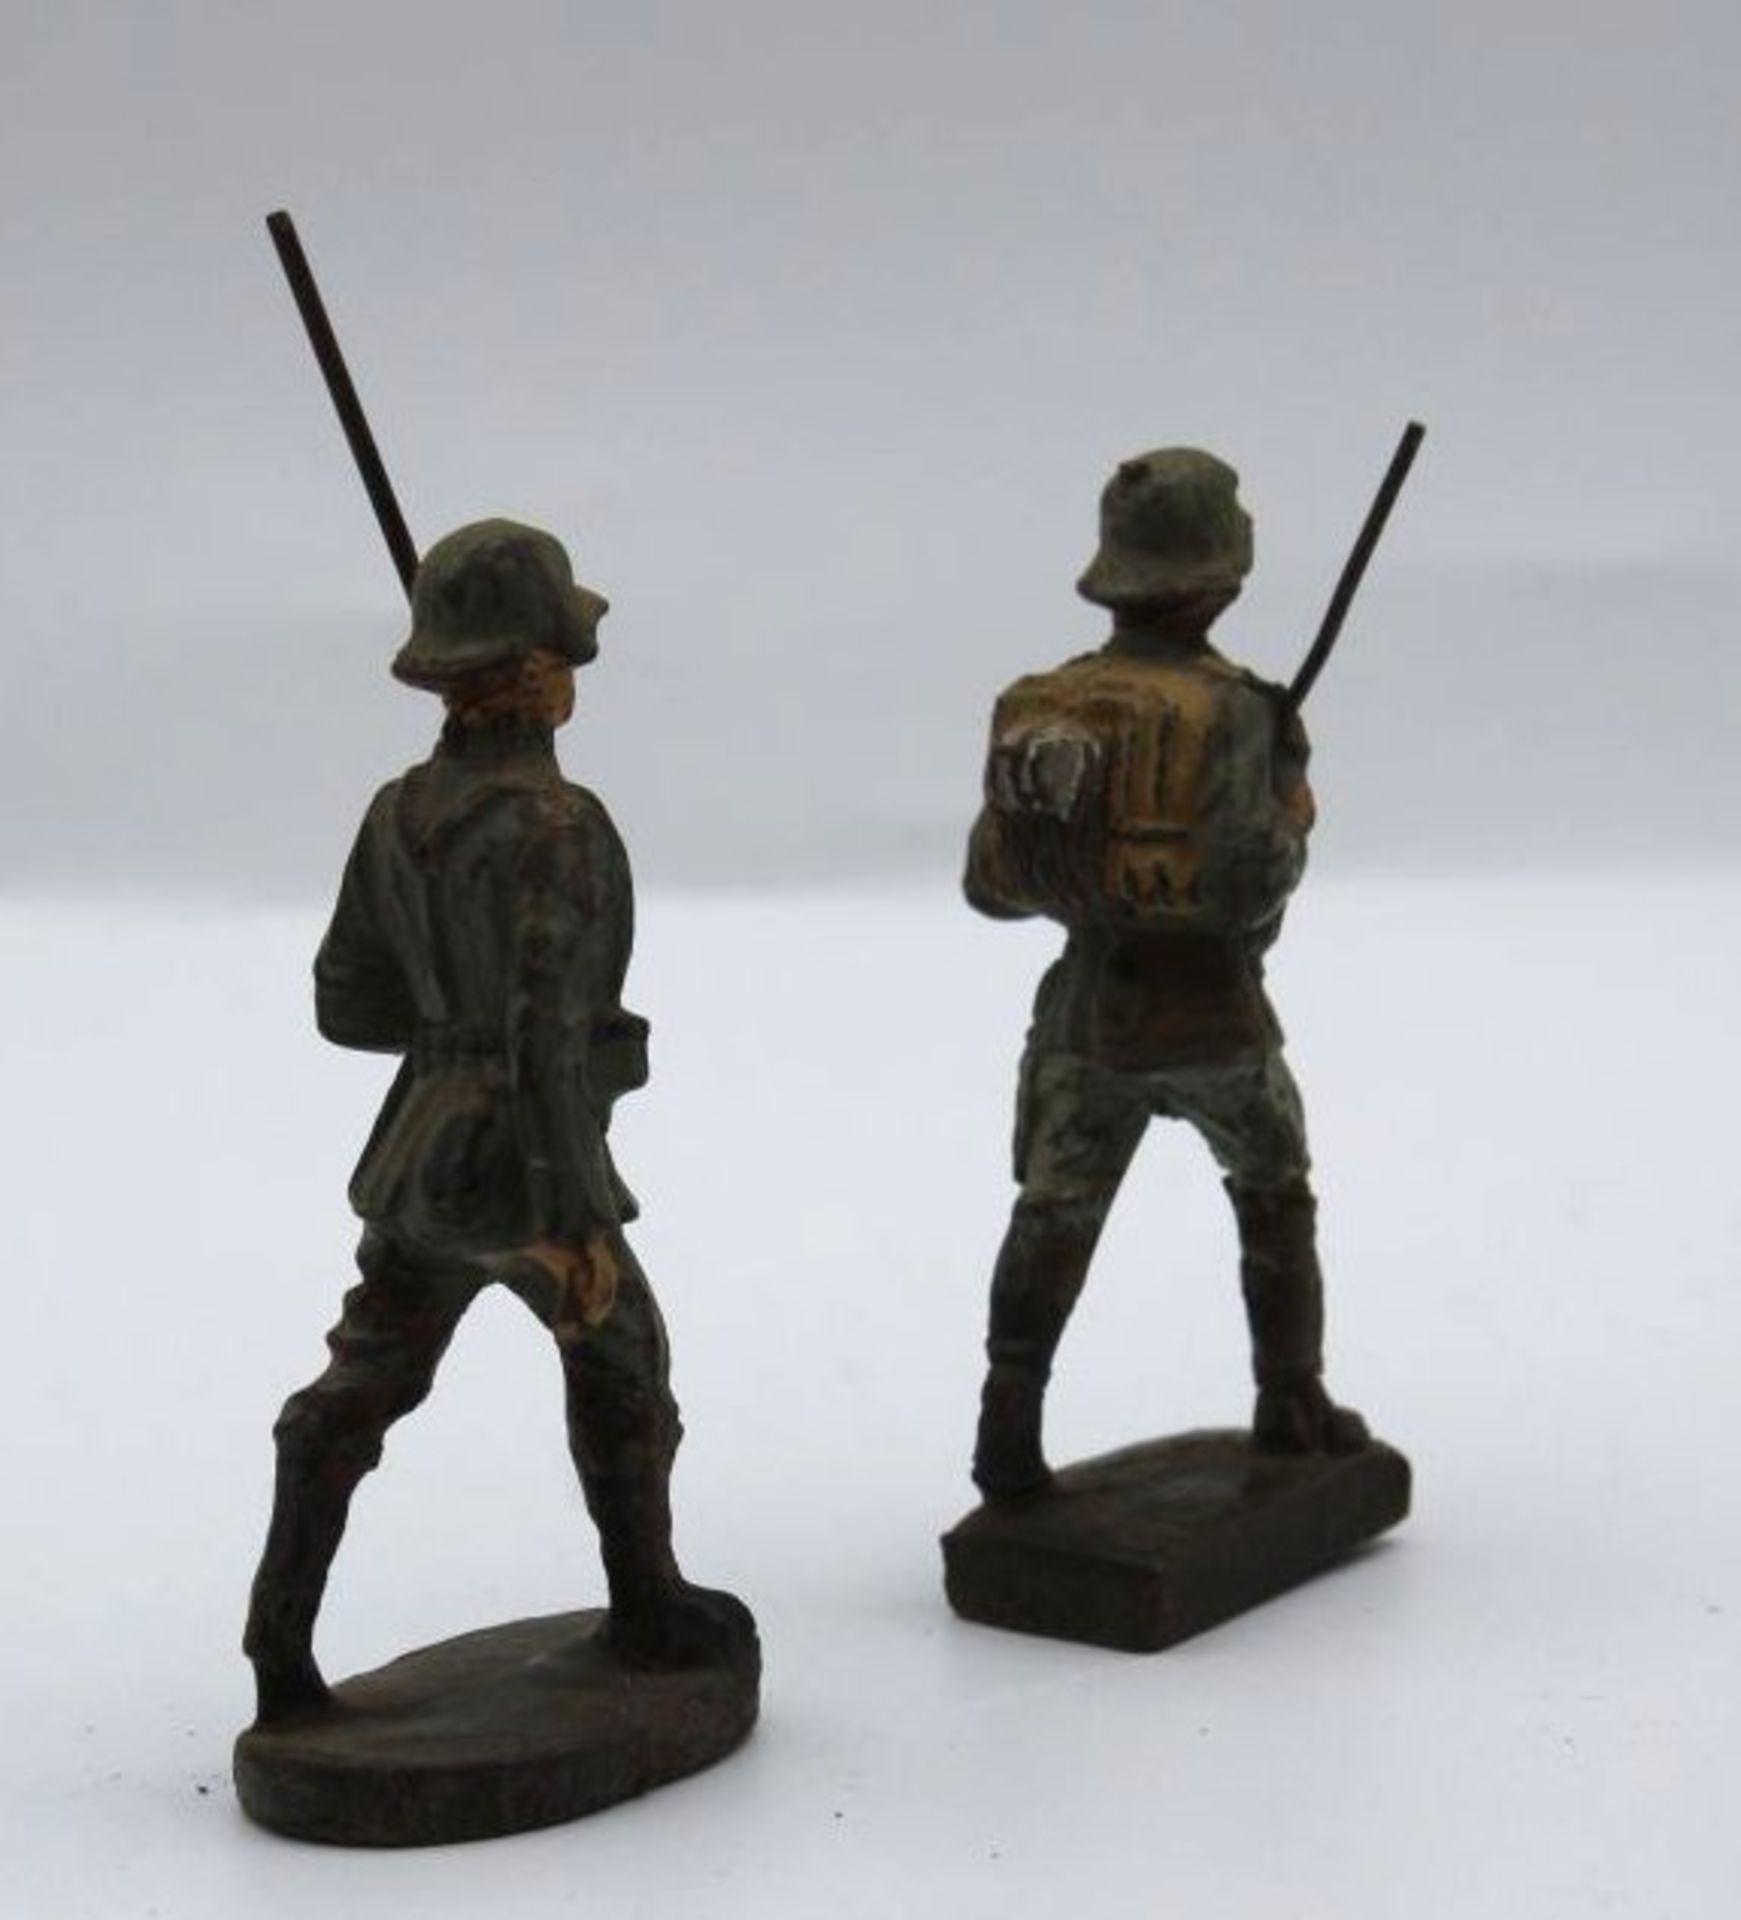 2x marschierende Soldaten, Lineol/Elastolin, wohl 2. WK, Alters-u. Gebrauchsspuren, ca. H-7,5cm. - Image 2 of 4